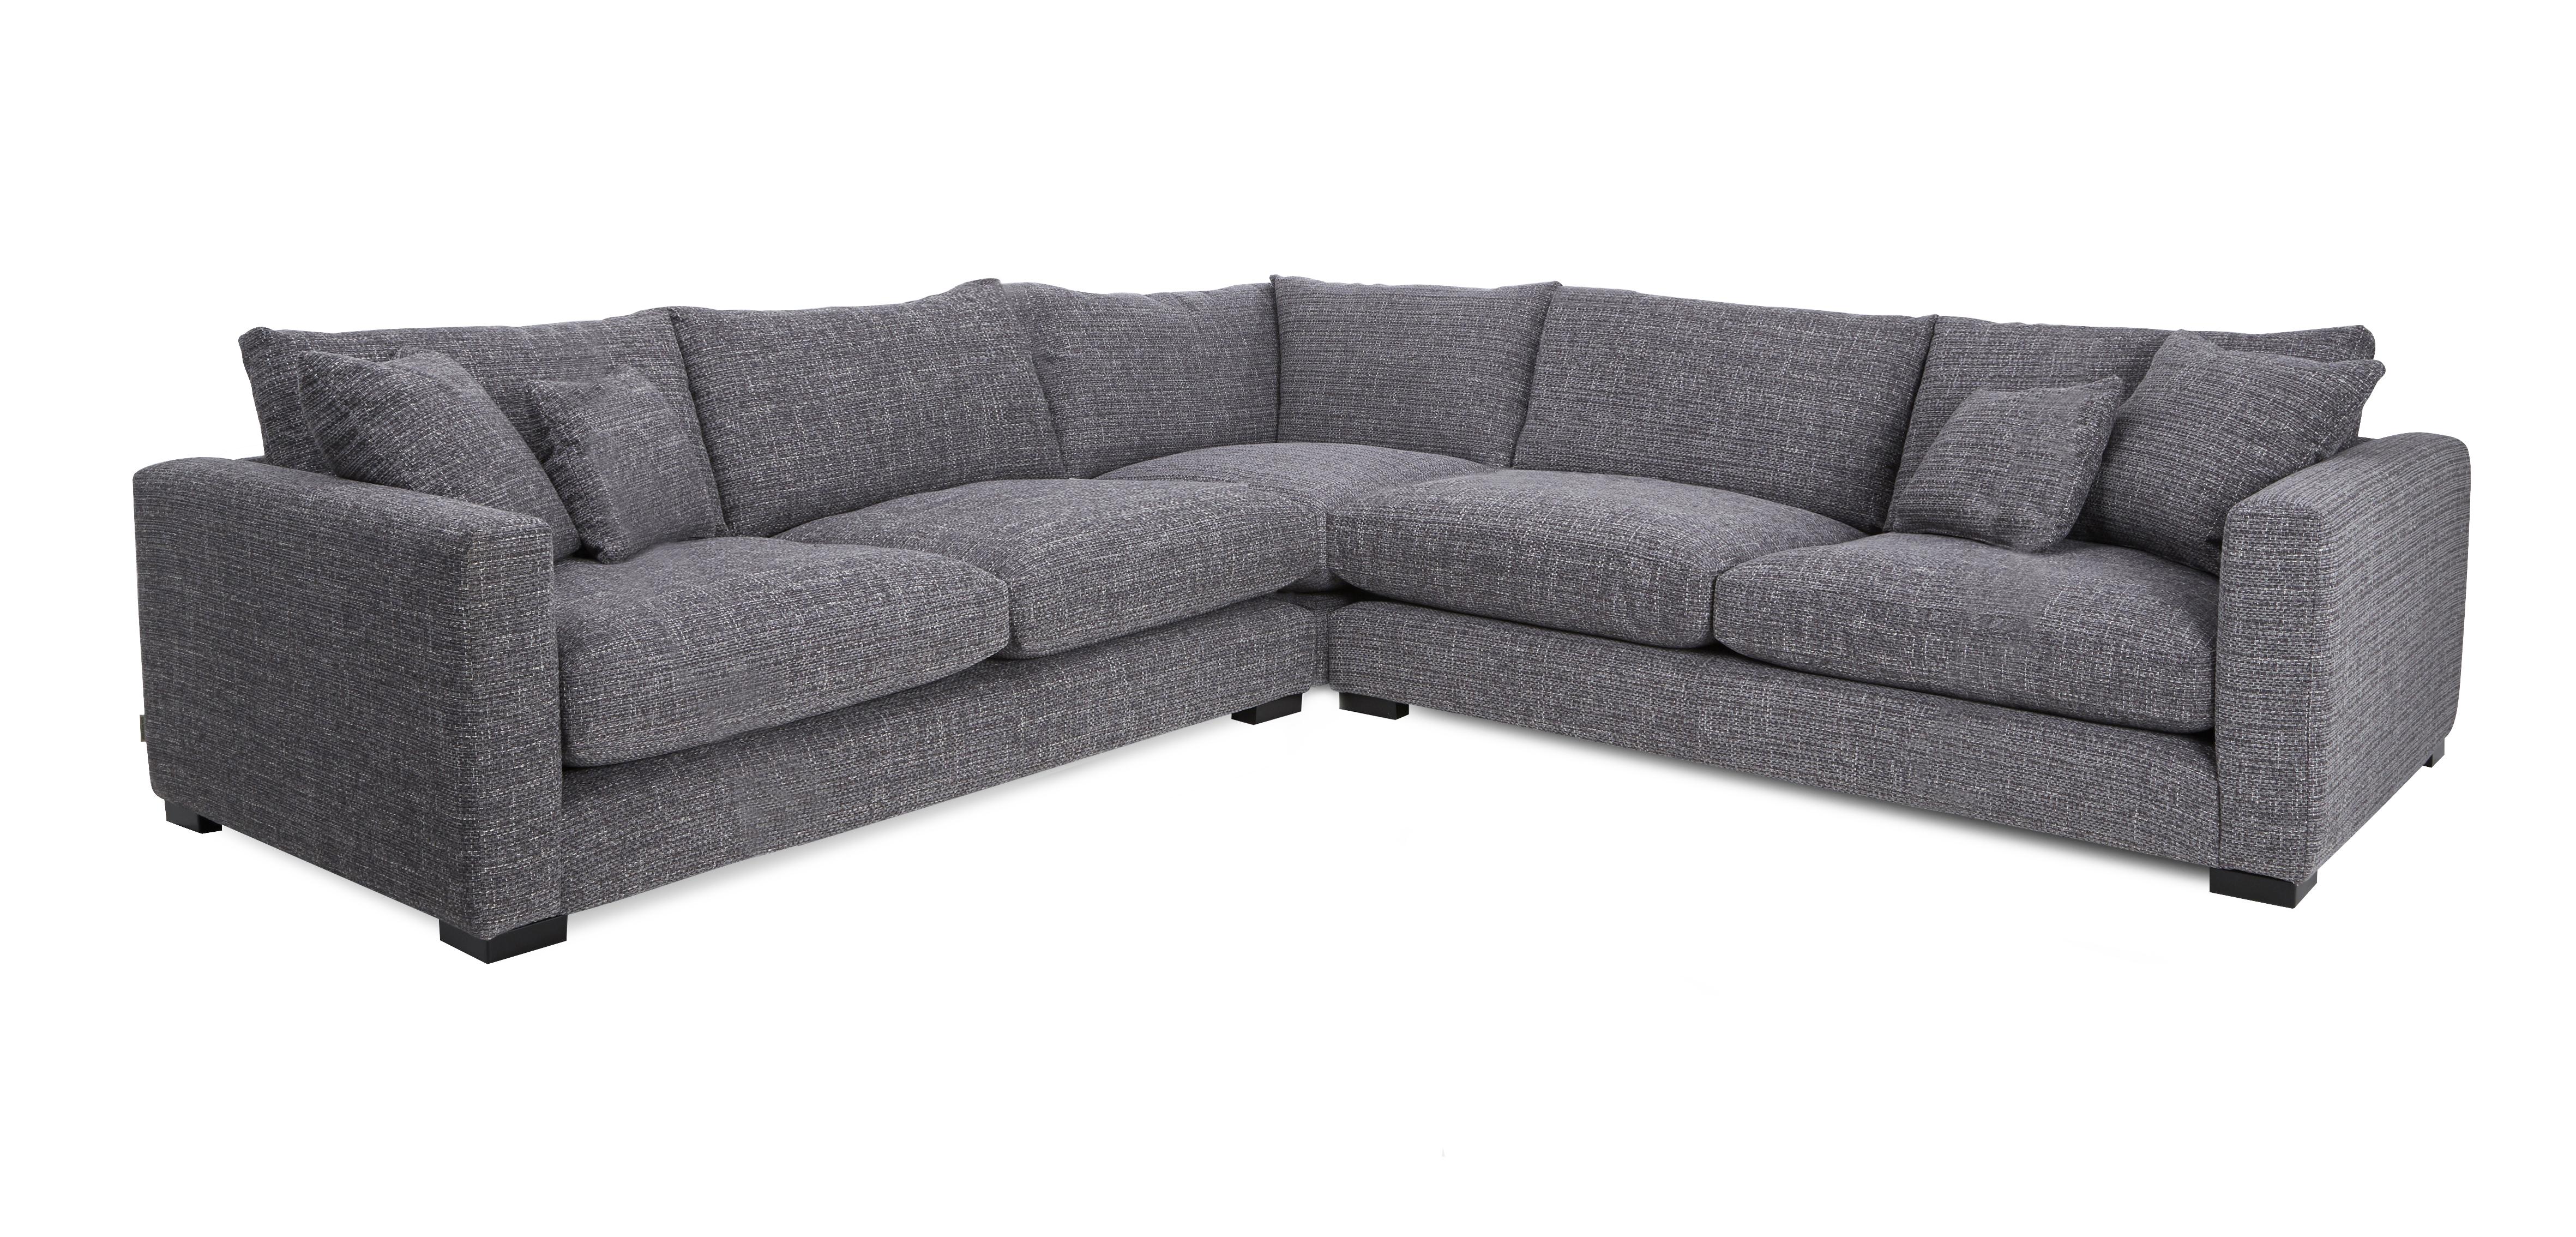 dfs grey corner sofa bed